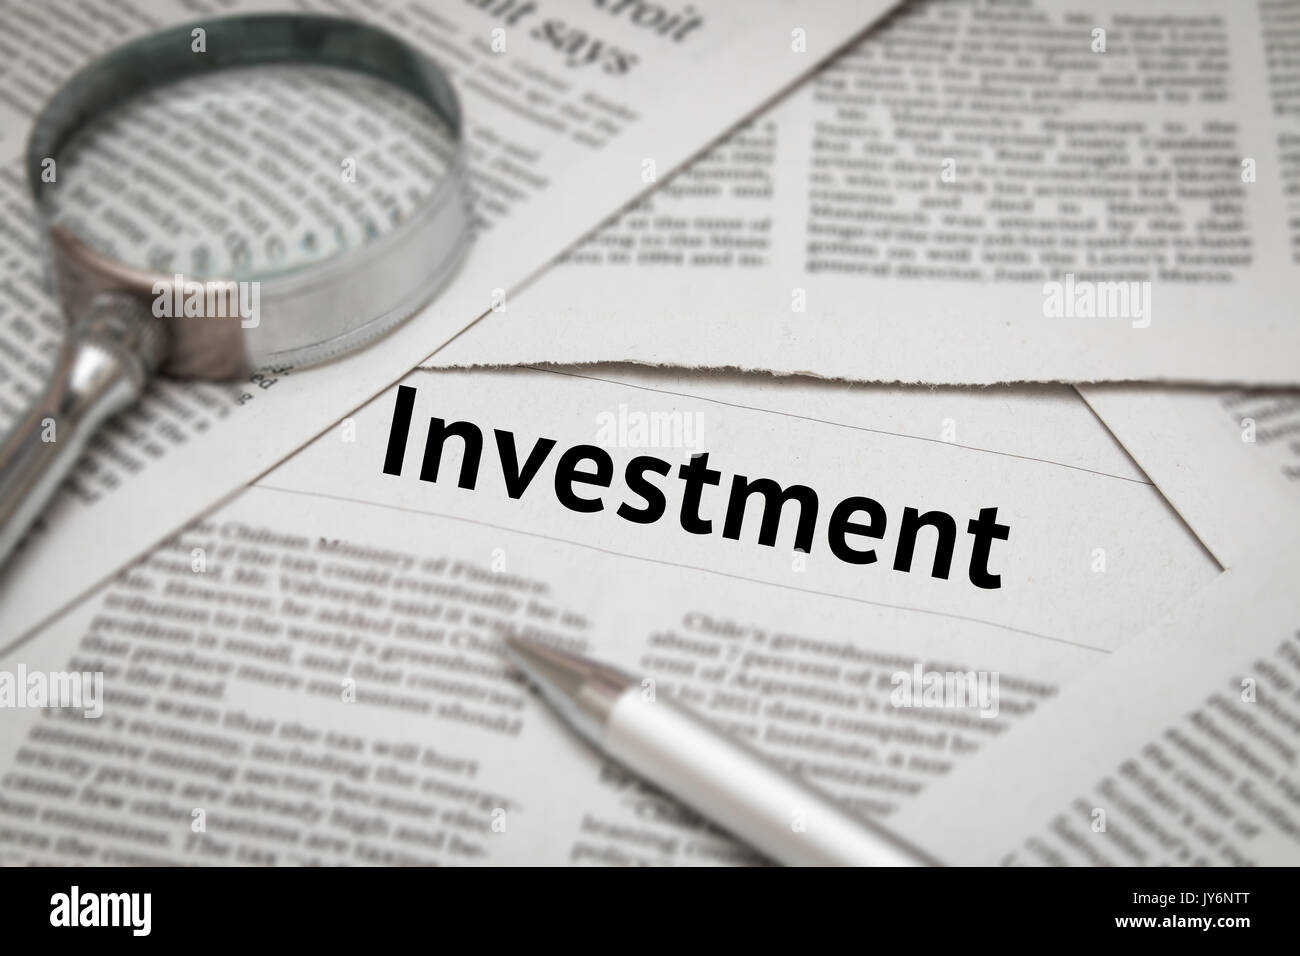 investment headline on newspaper media Stock Photo